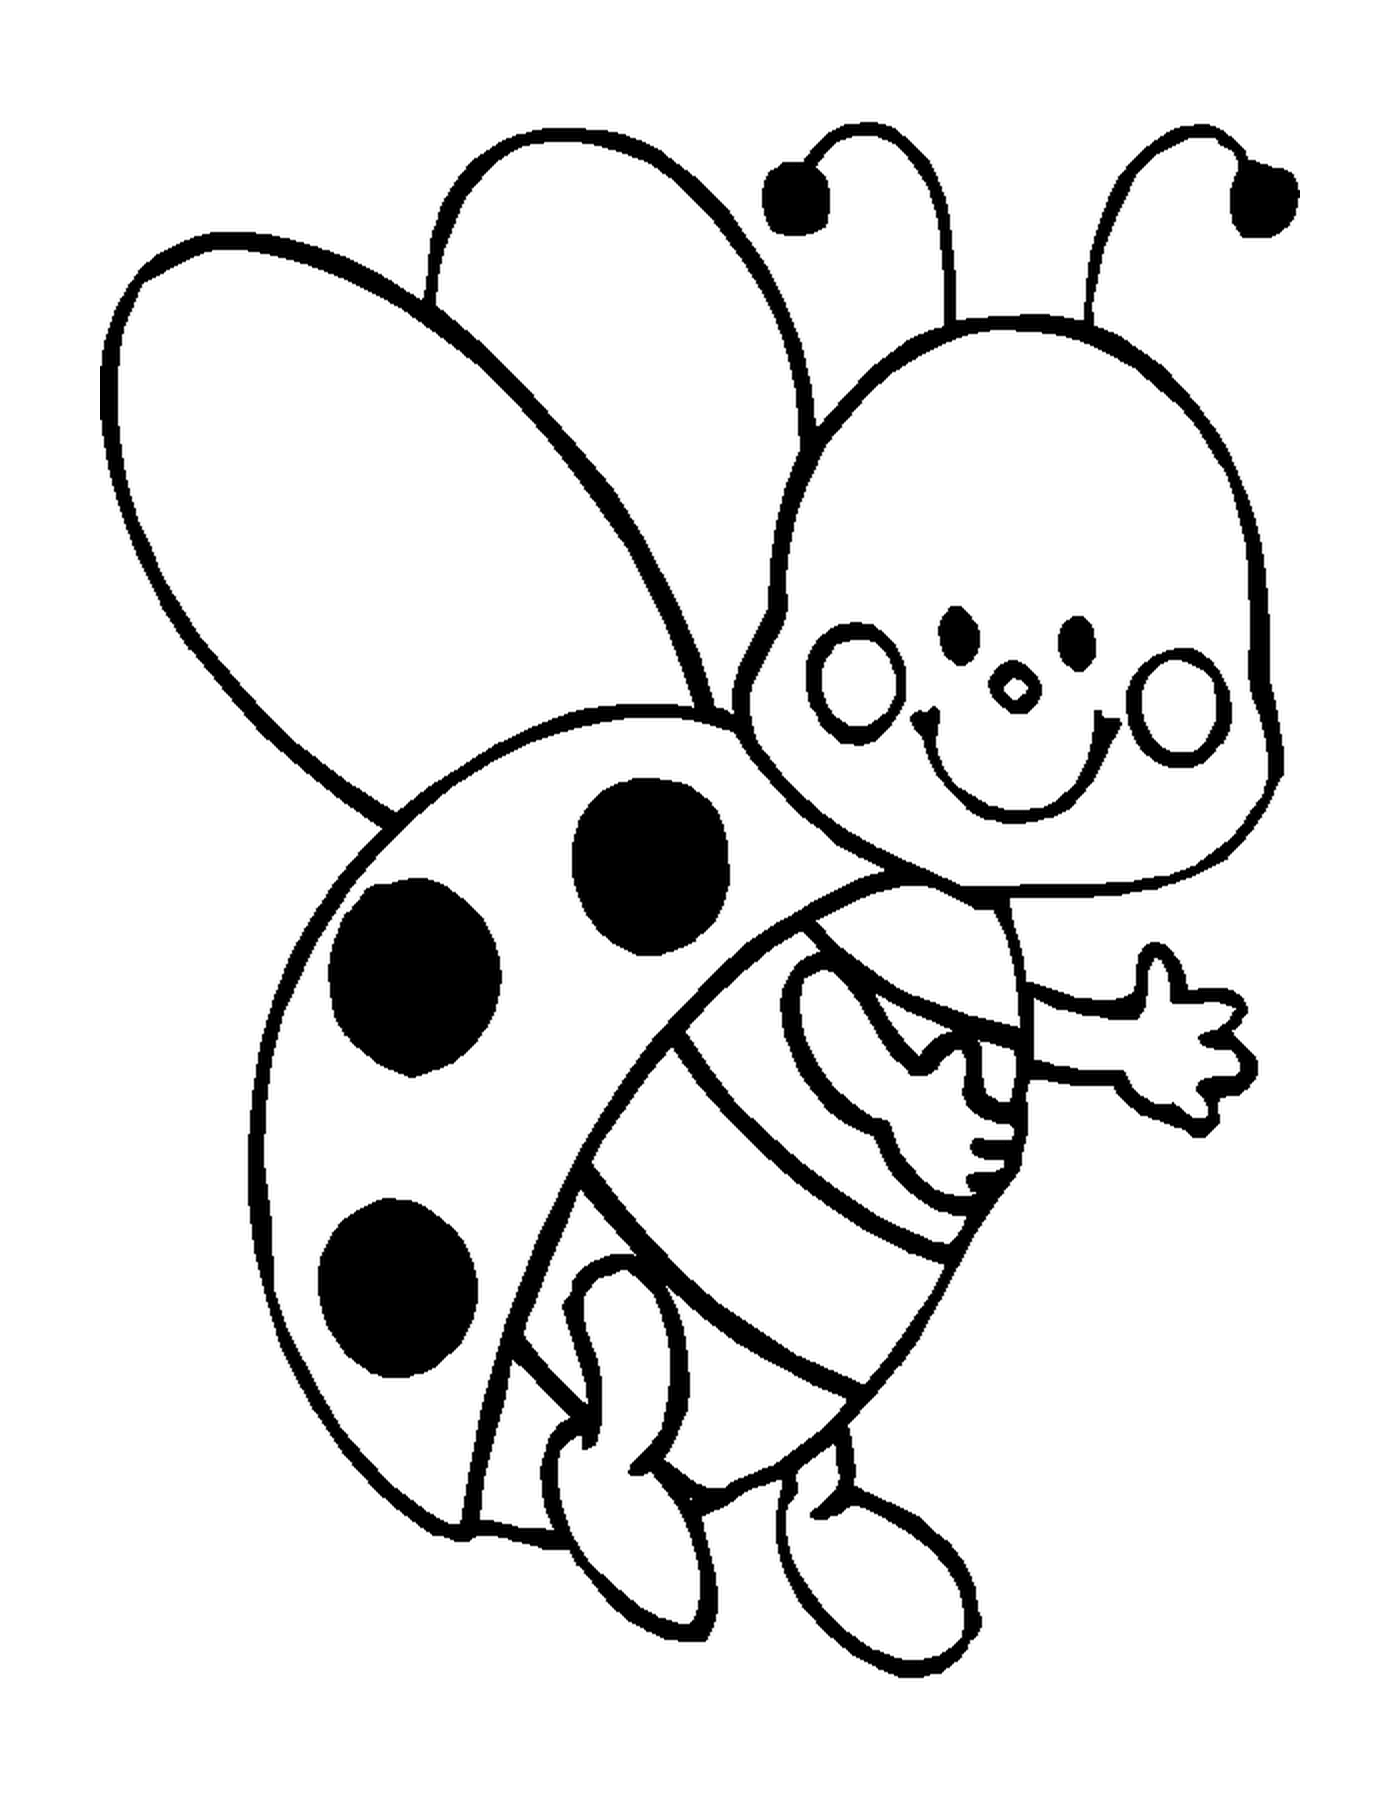  Ladybug with a radiant smile 